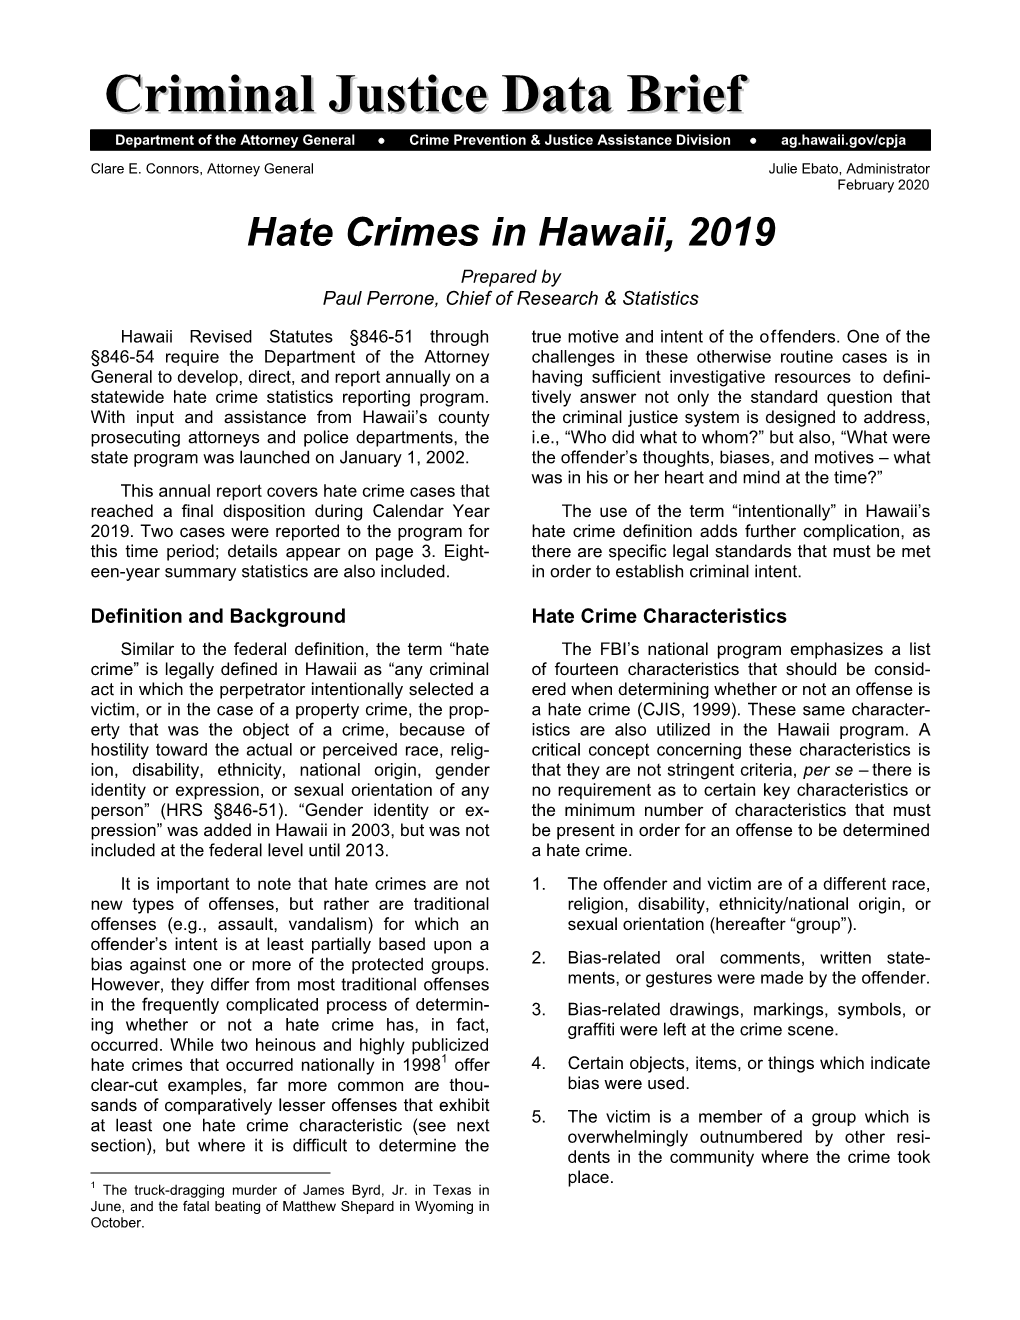 Hate Crimes in Hawaii 2019